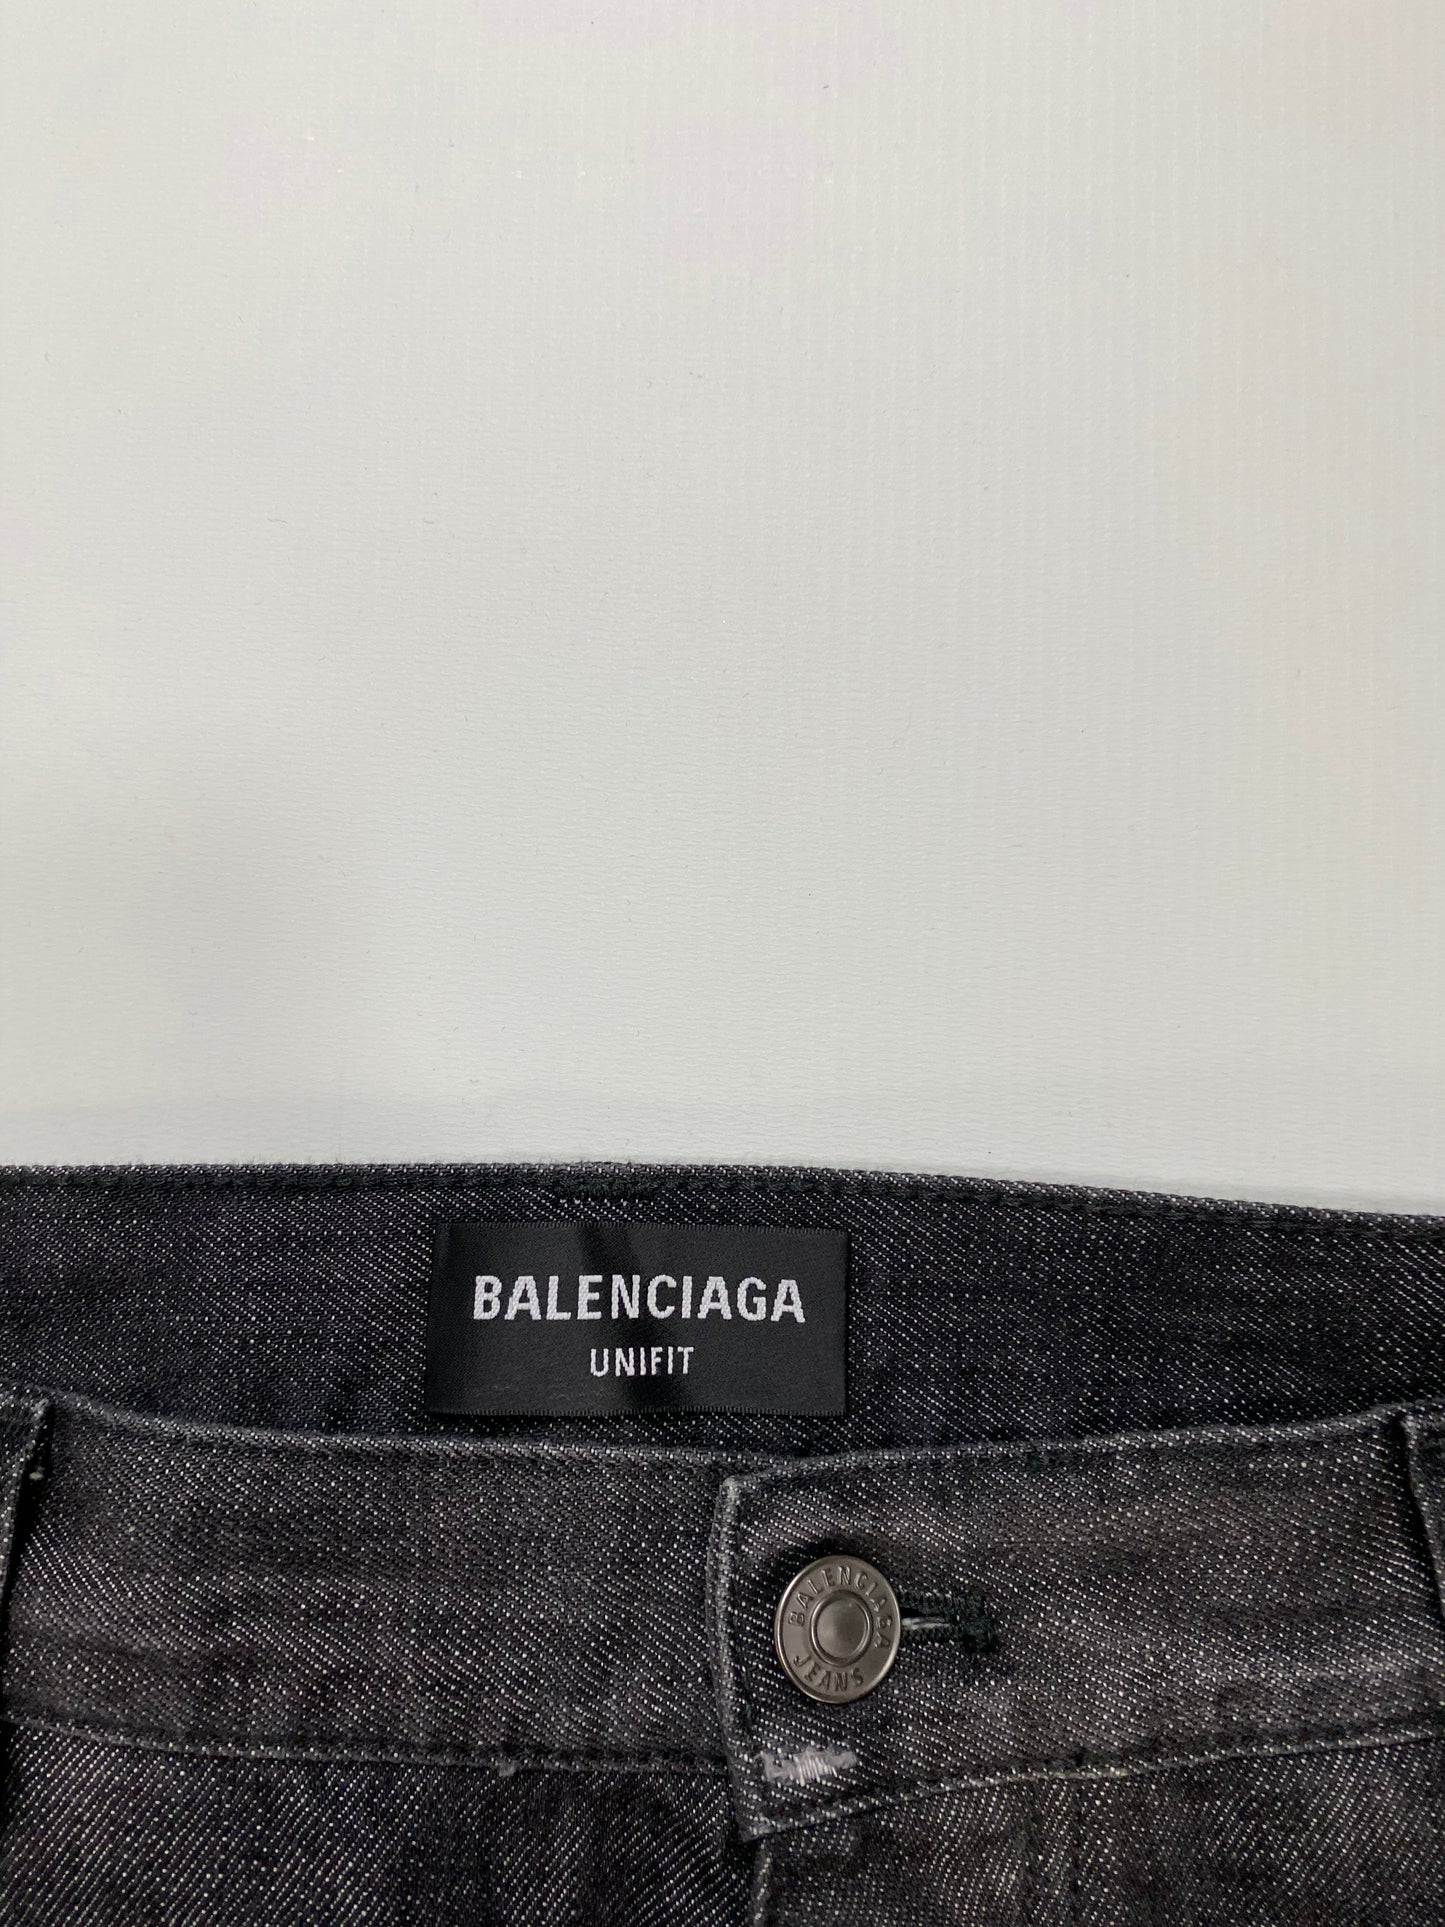 Balenciaga SS22 red carpet grey ripped baggy jeans SZ:XS|S